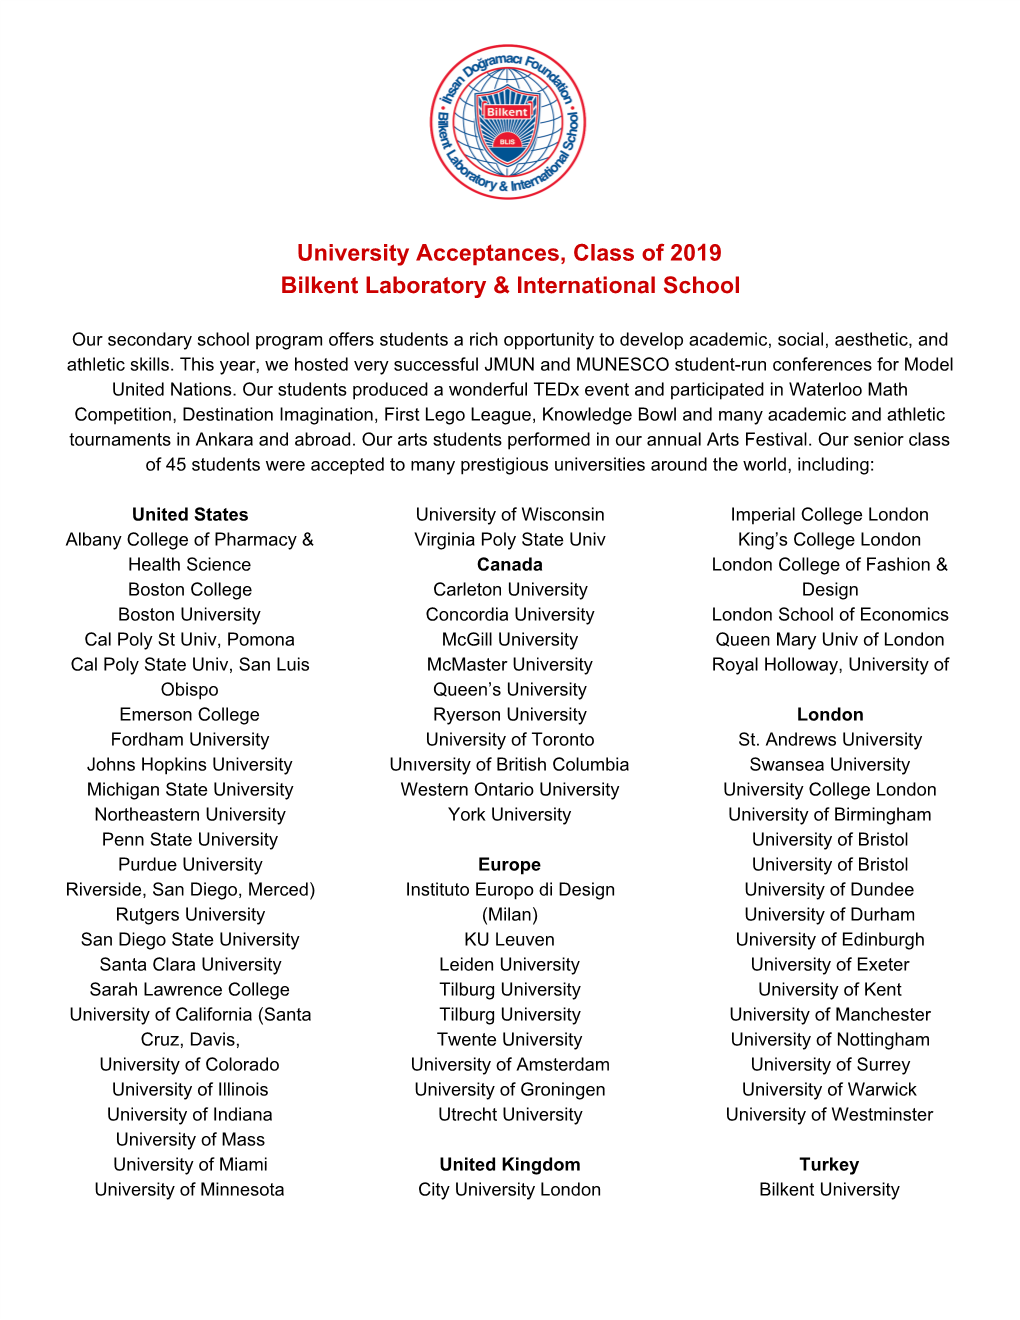 University Acceptances, Class of 2019 Bilkent Laboratory & International School